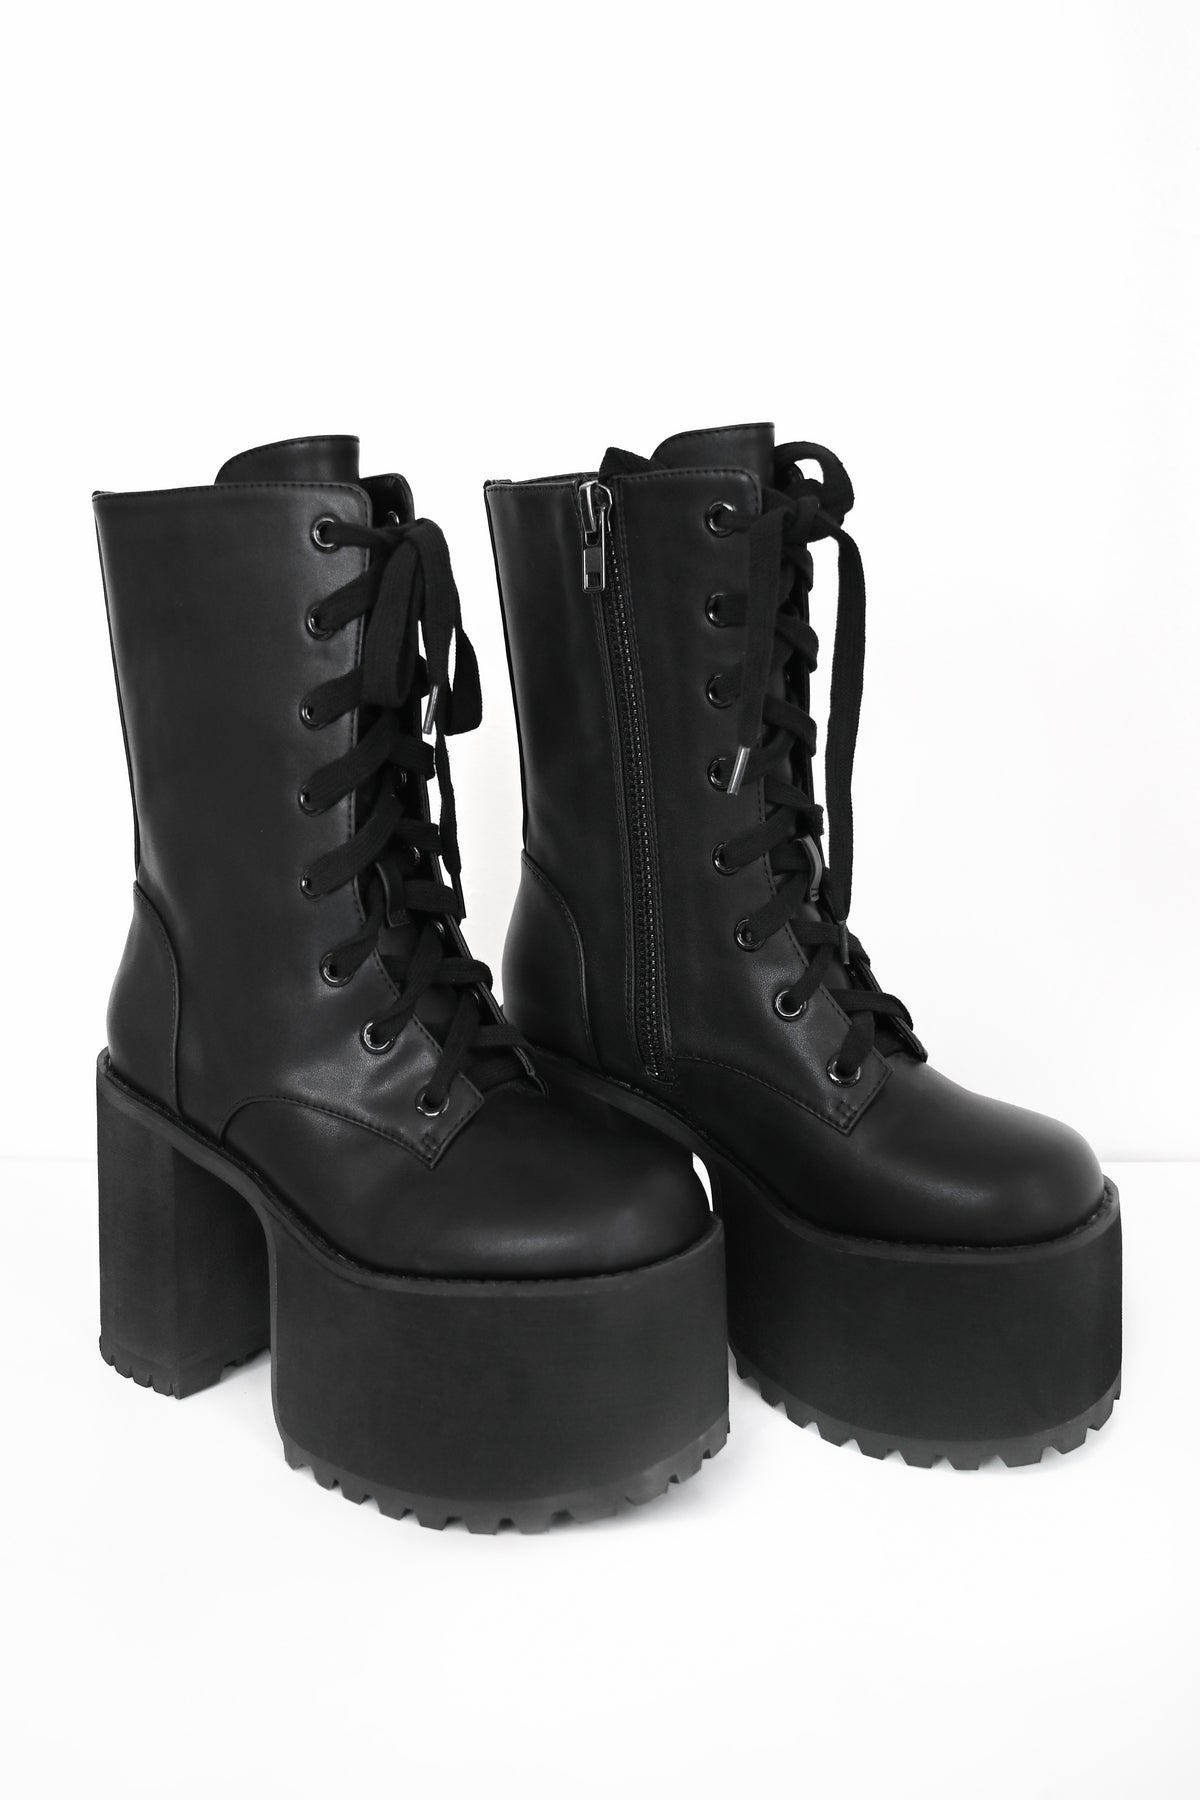 Black Vegan Leather Platform boot with a 4.5in heel, Black Eyelets and Dark Gunmetal Zipper